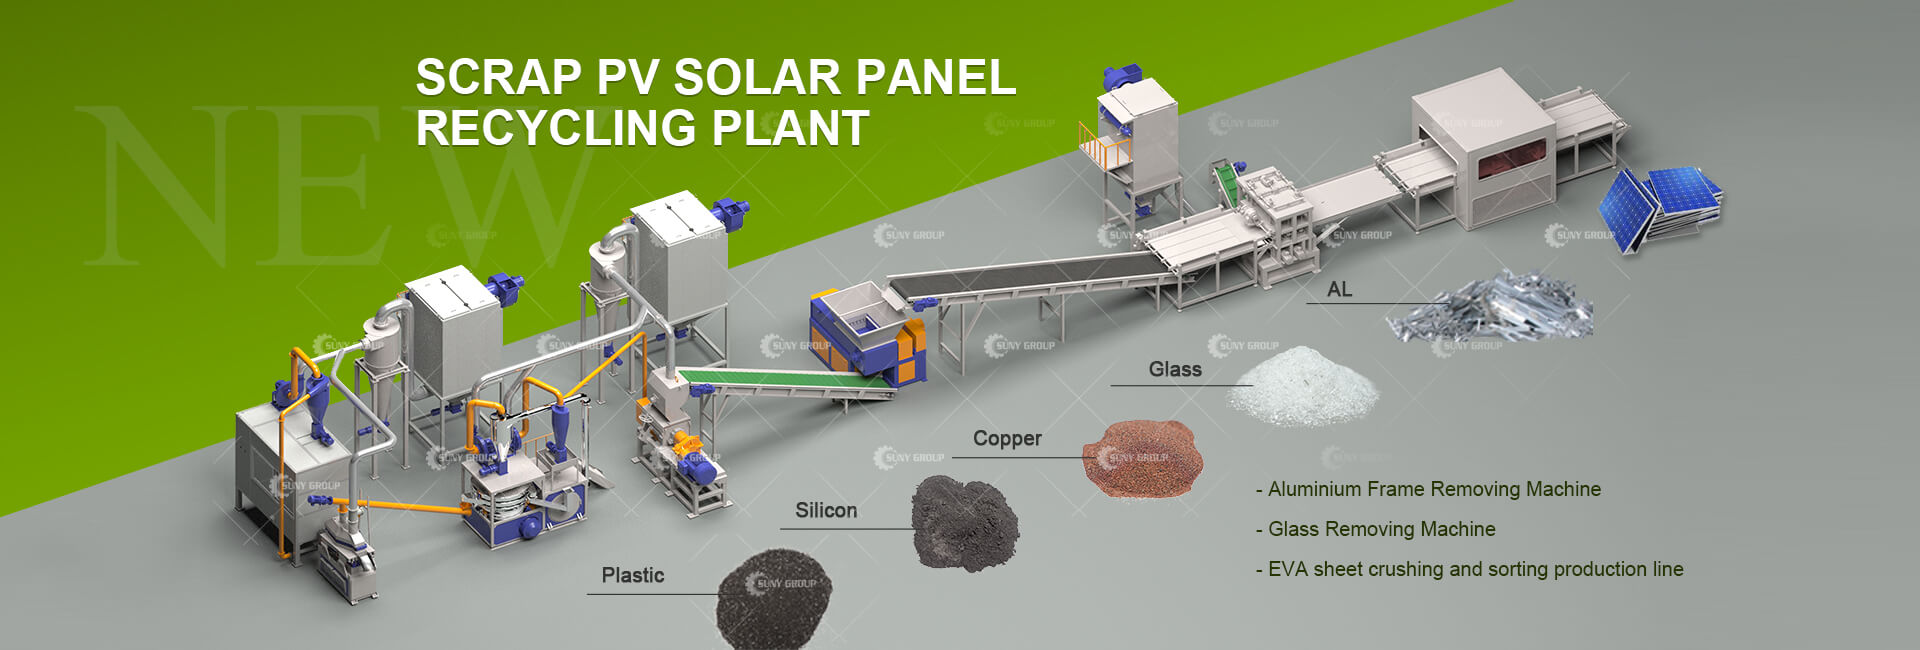 Scrap PV Solar Panel Recycling Plant